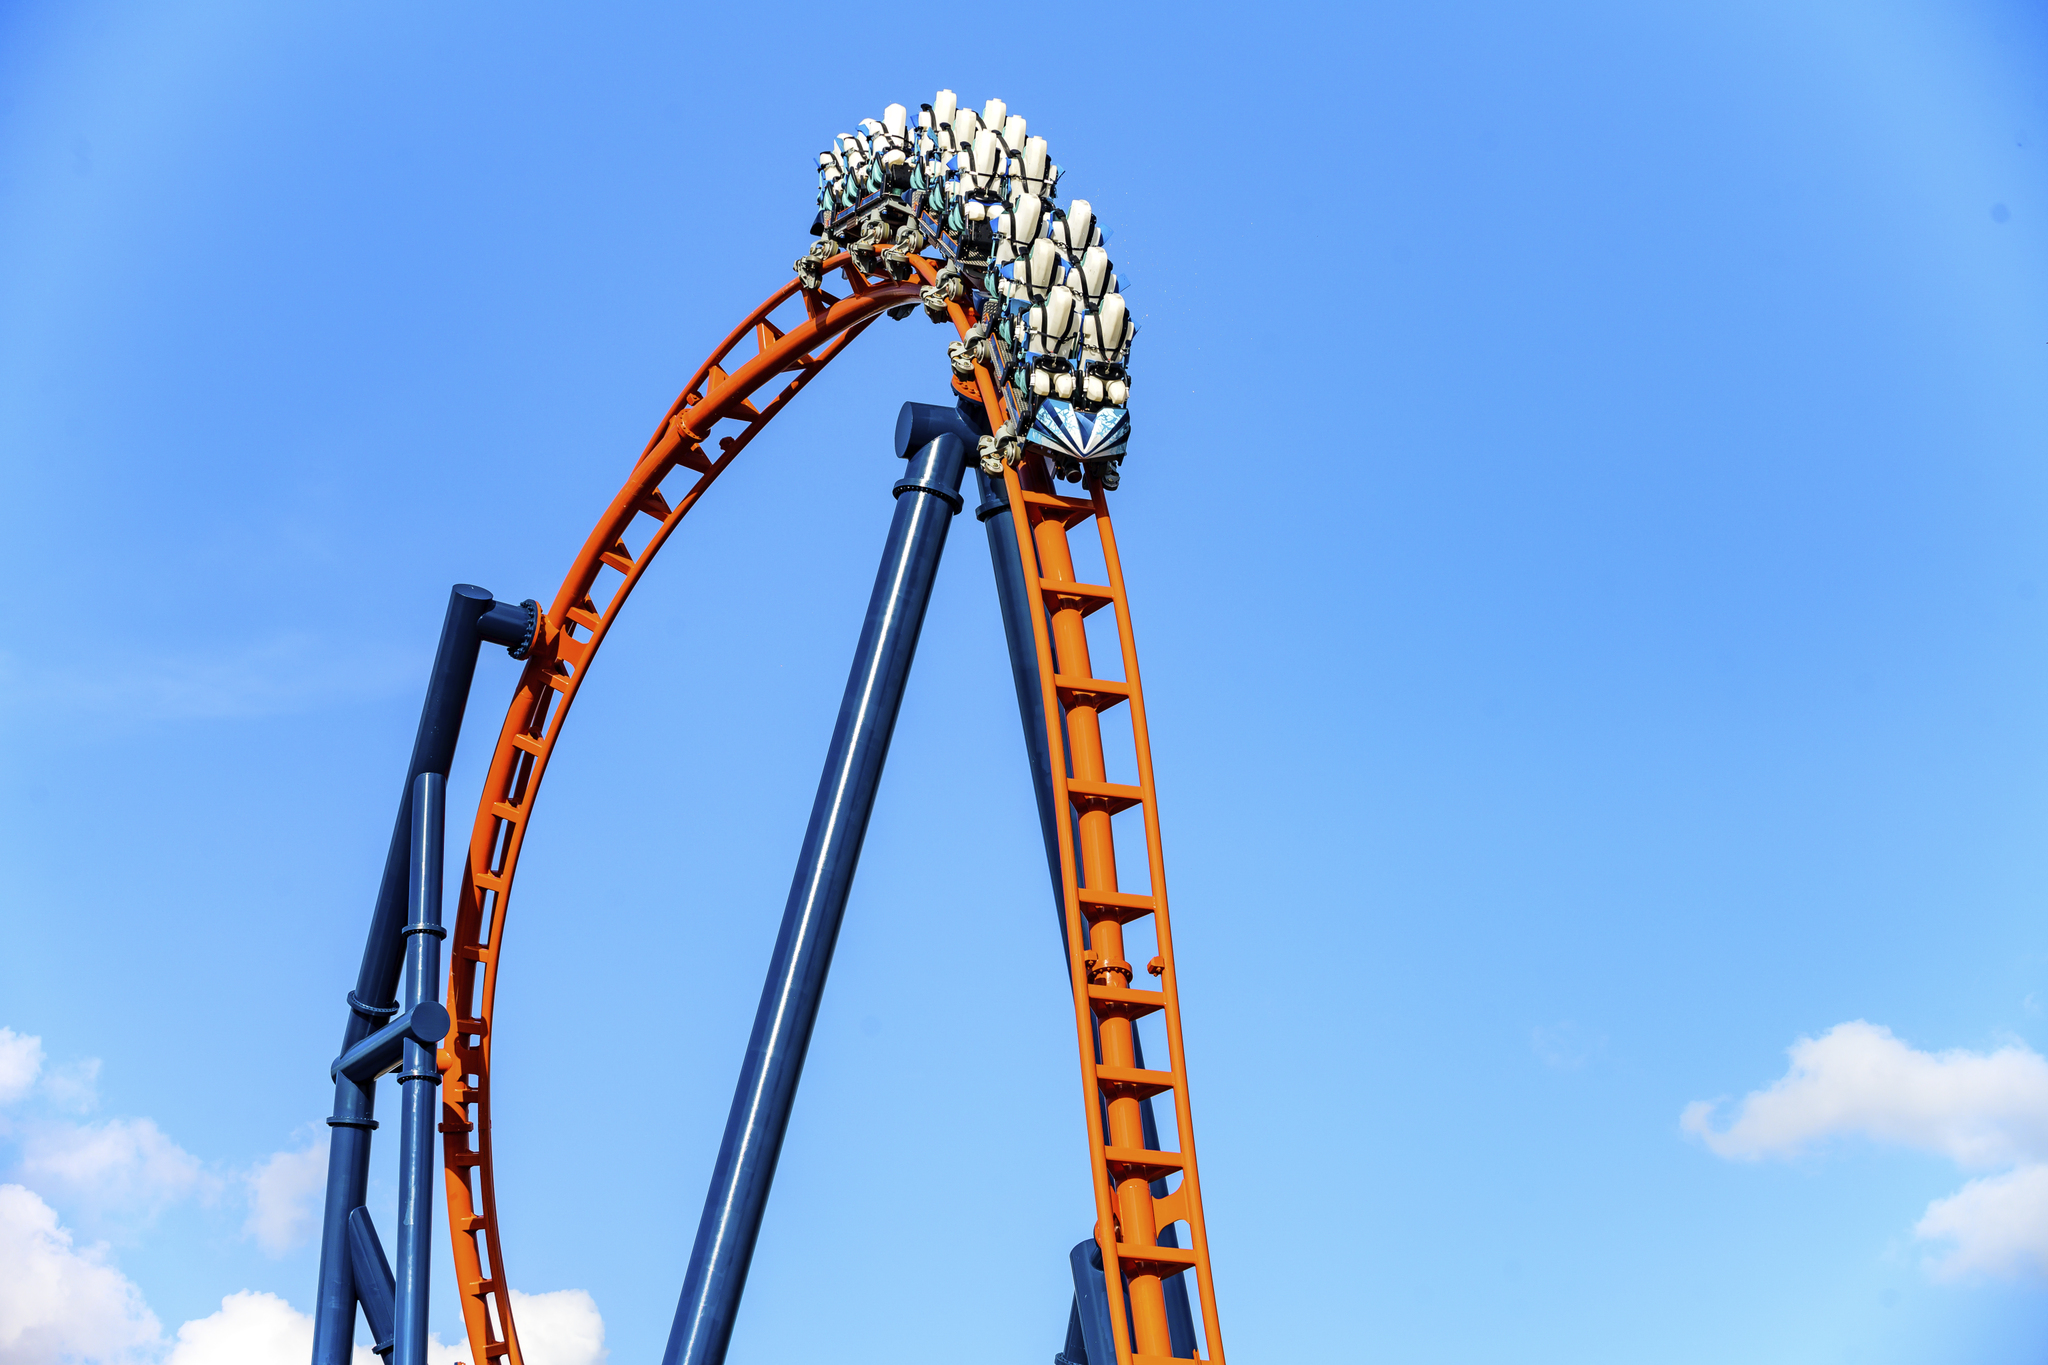 SeaWorld Orlando's Ice Breaker roller coaster gets opening date